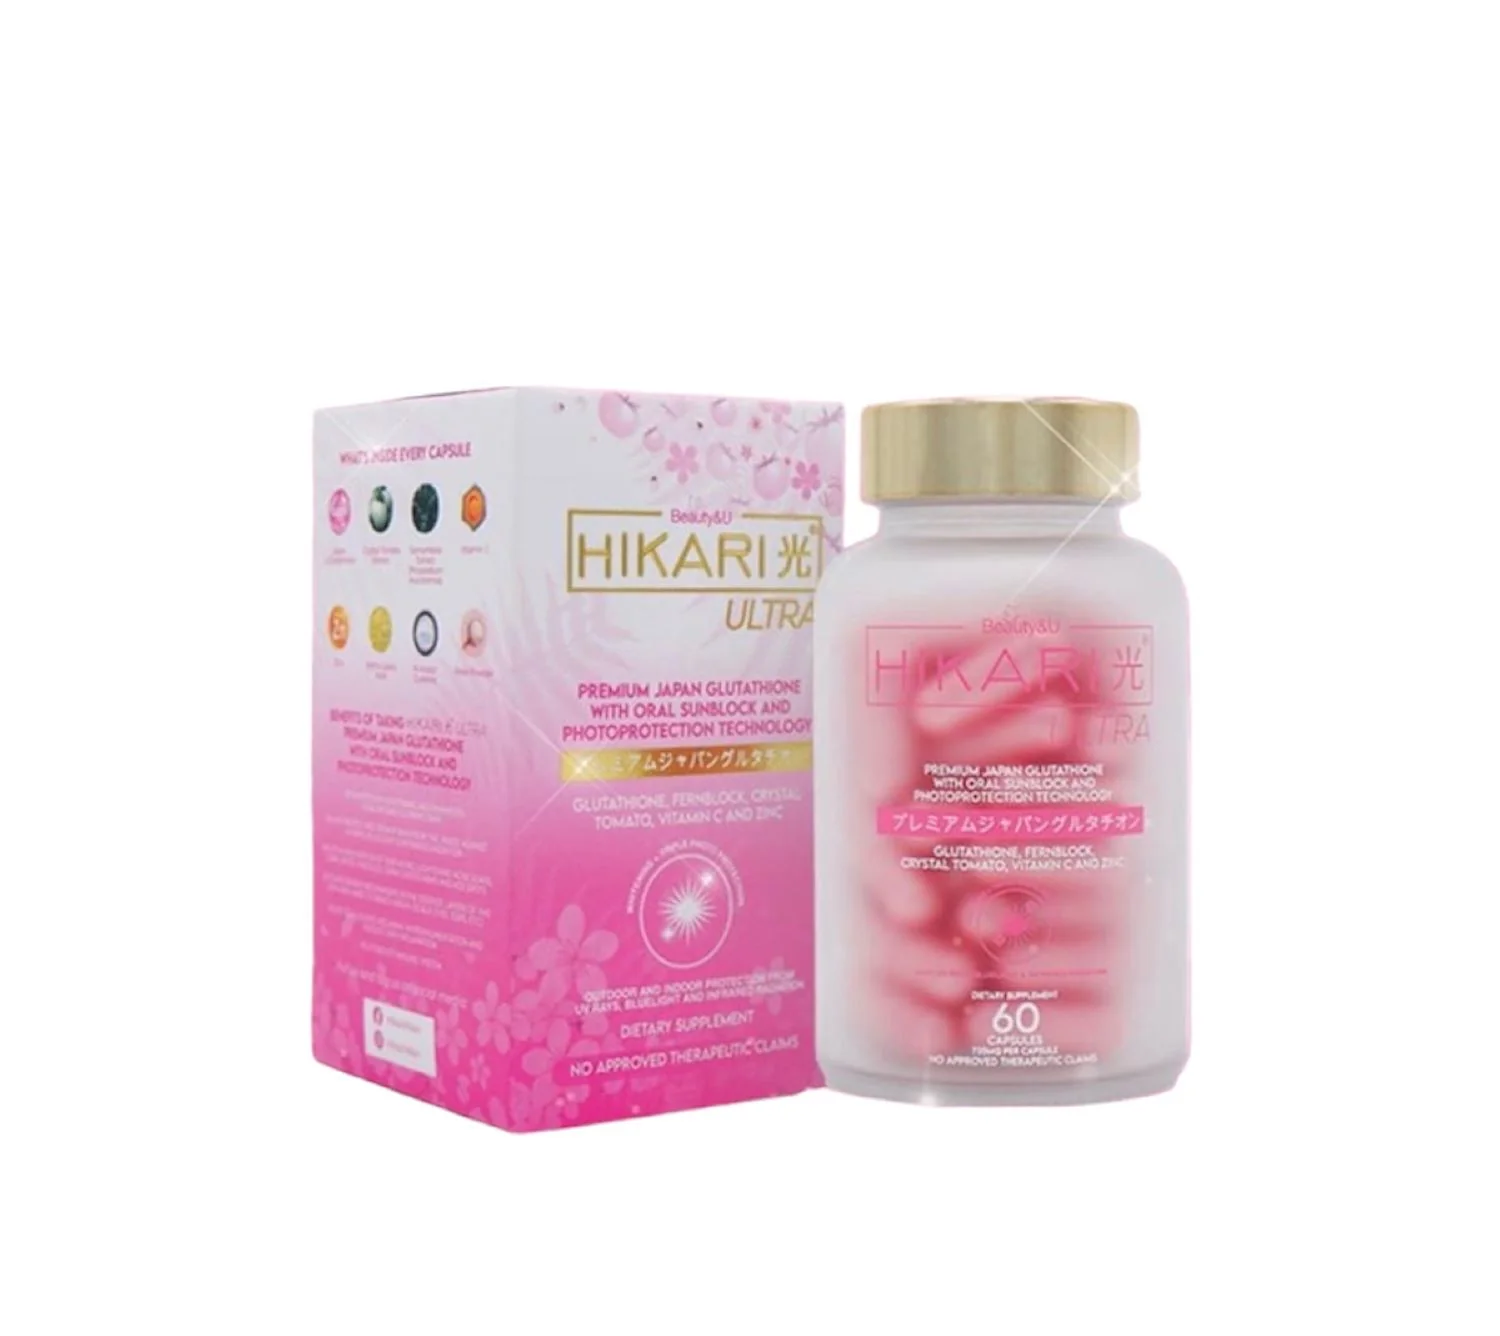 Hikari Ultra Glutathione Skin Bleaching /Lightening Capsules w/ Oral Sunblock - $99.99